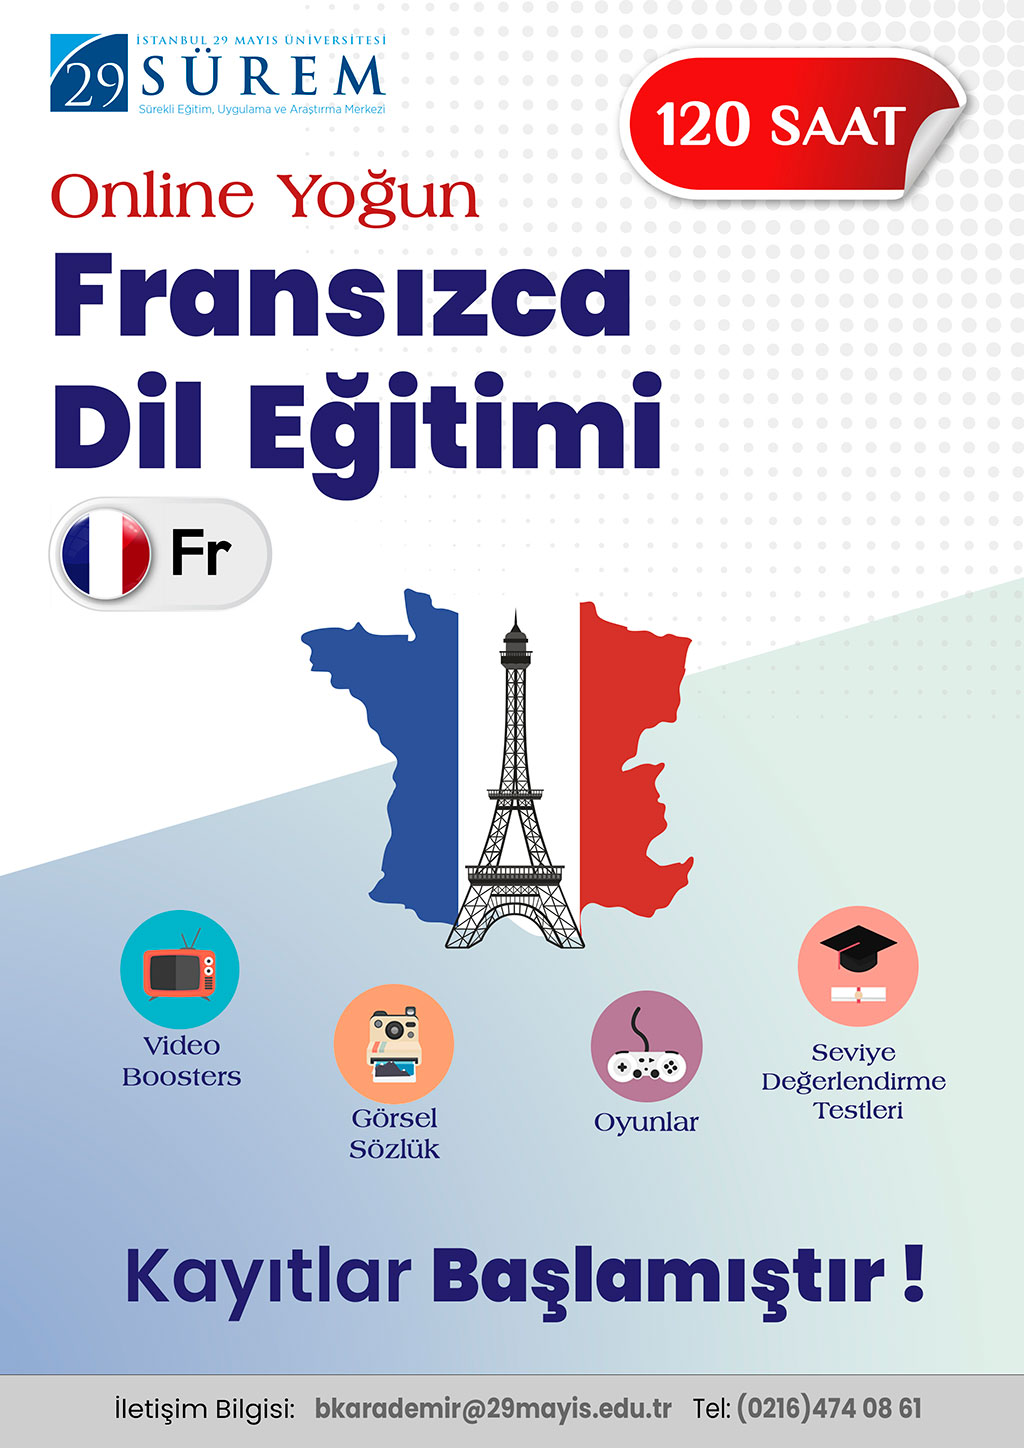 Online Yoğun Fransızca Dil Eğitimi